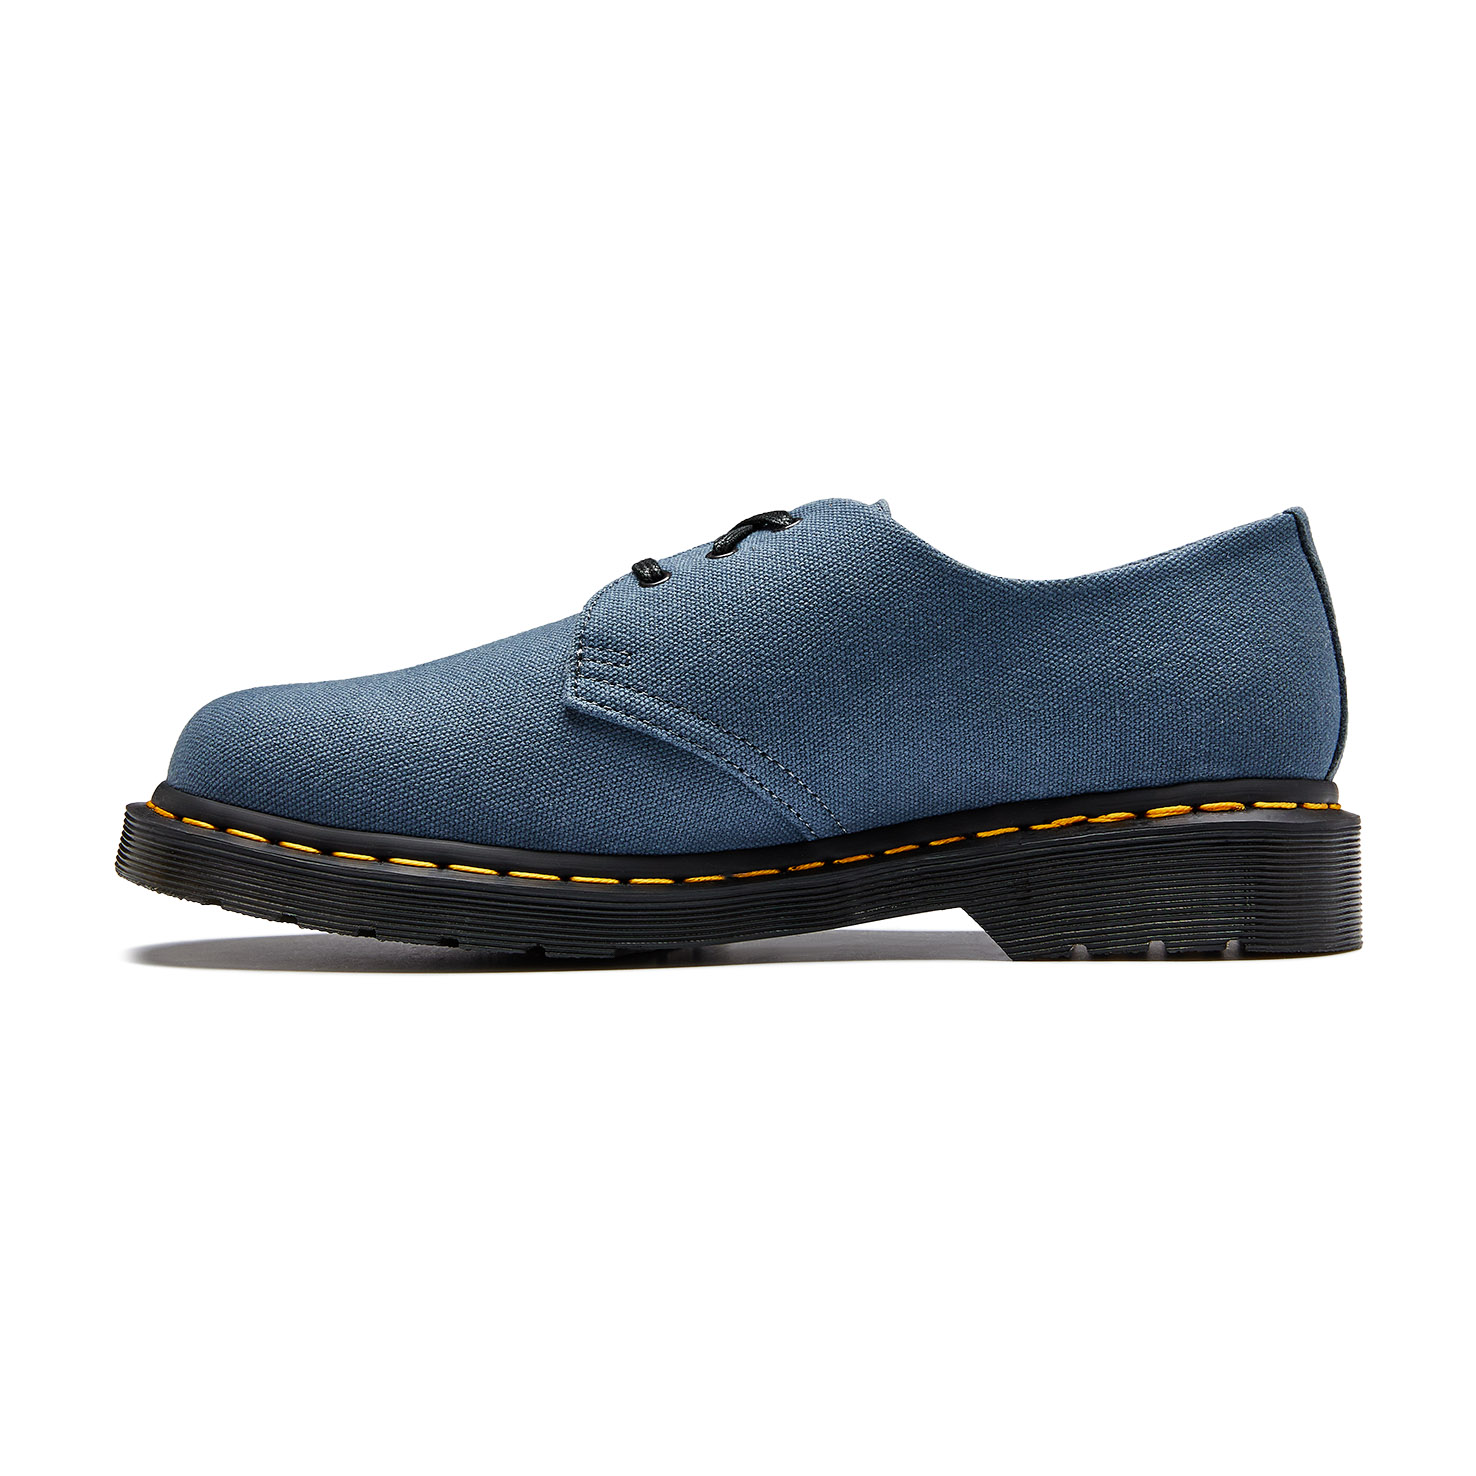 1461 Canvas Oxford Shoes DR.MARTENS, размер 40, цвет синий DM27211 - фото 5